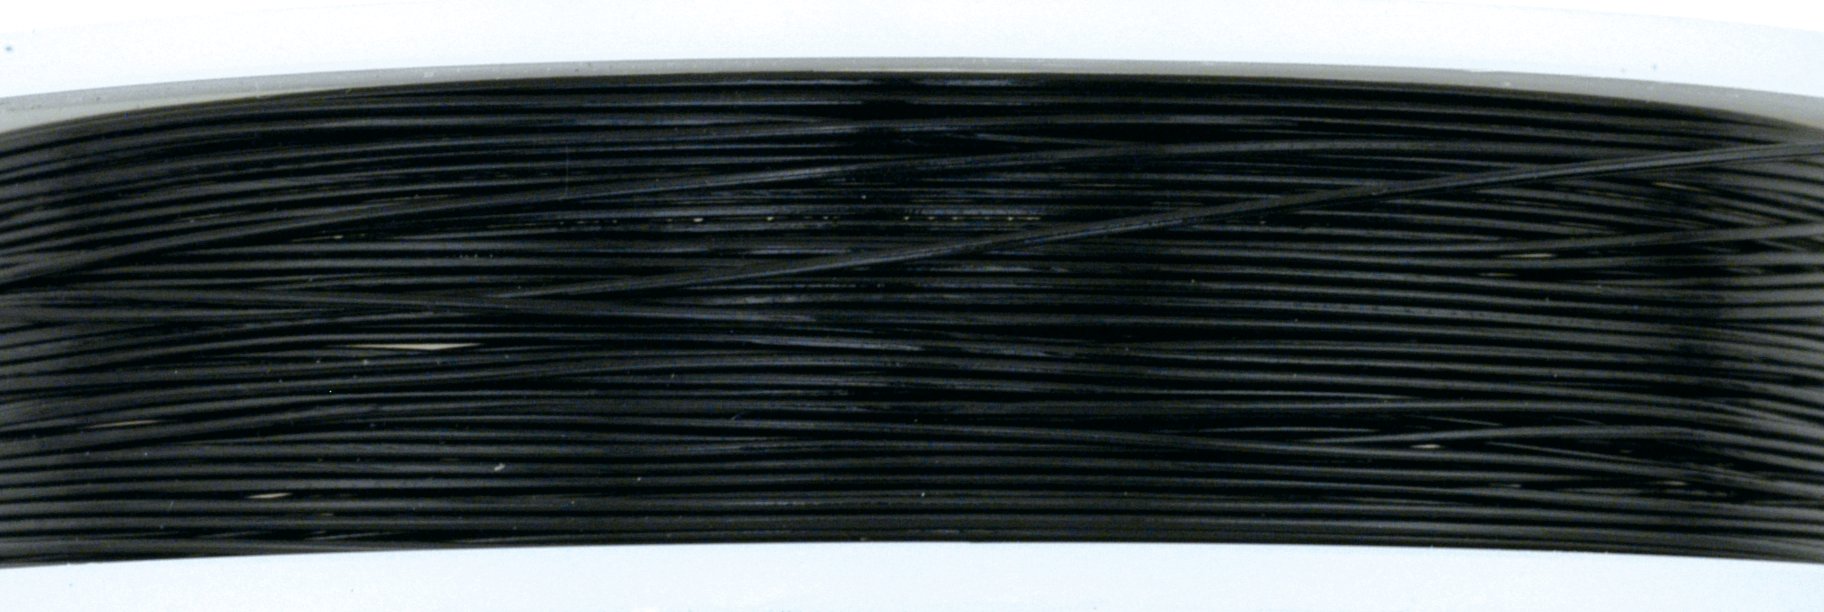 Beadalon® 19-Strand Bead Wire